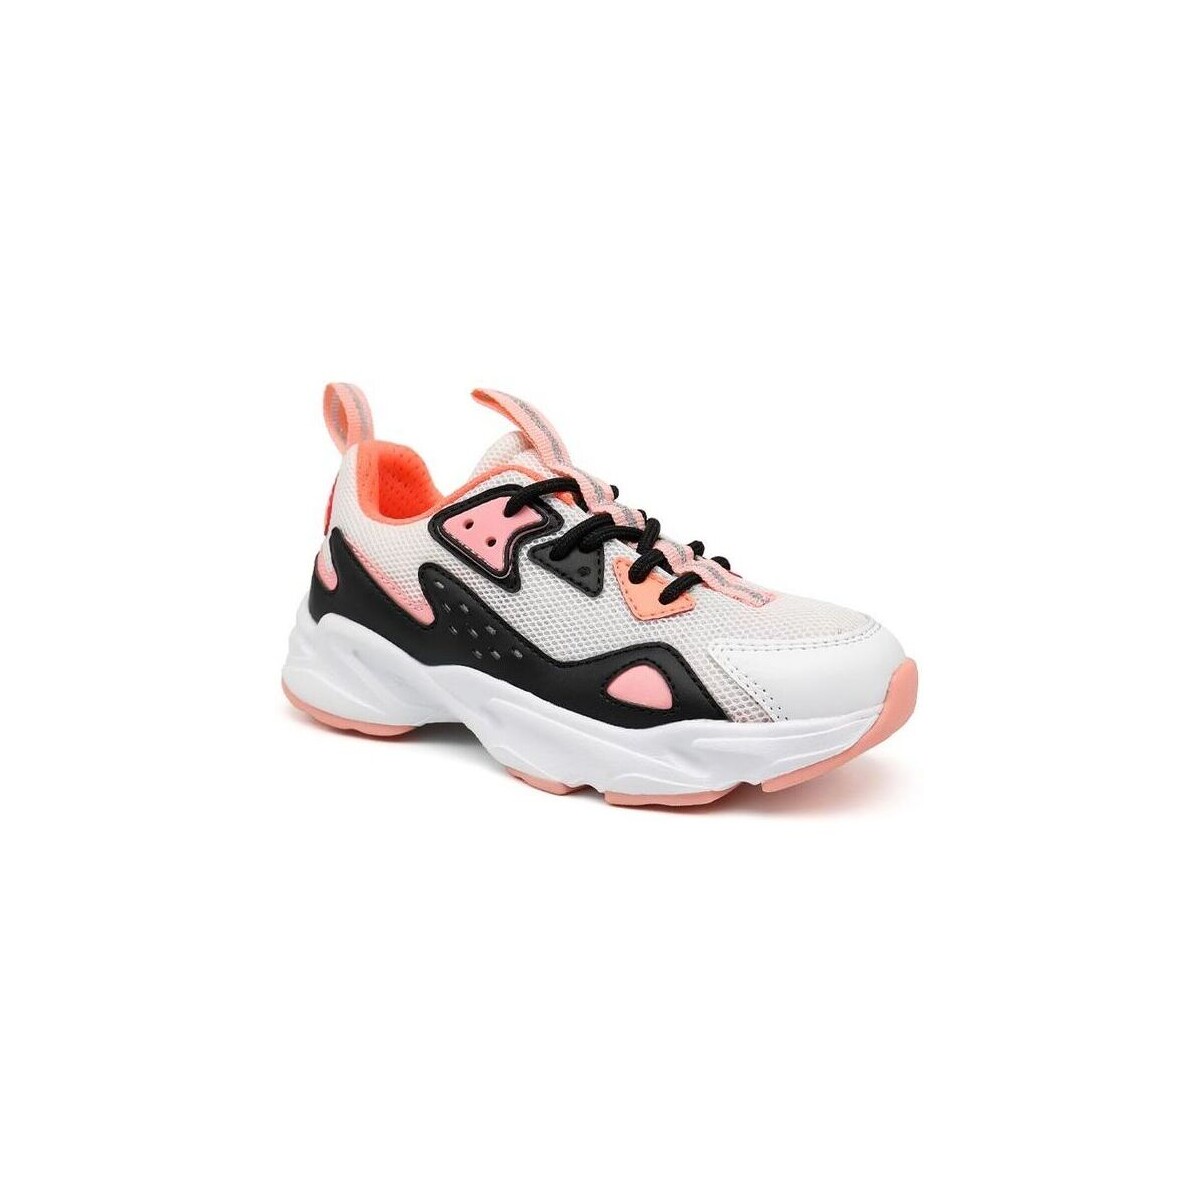 Sko Herre Sneakers Shone 8202-001 White/Pink Hvid